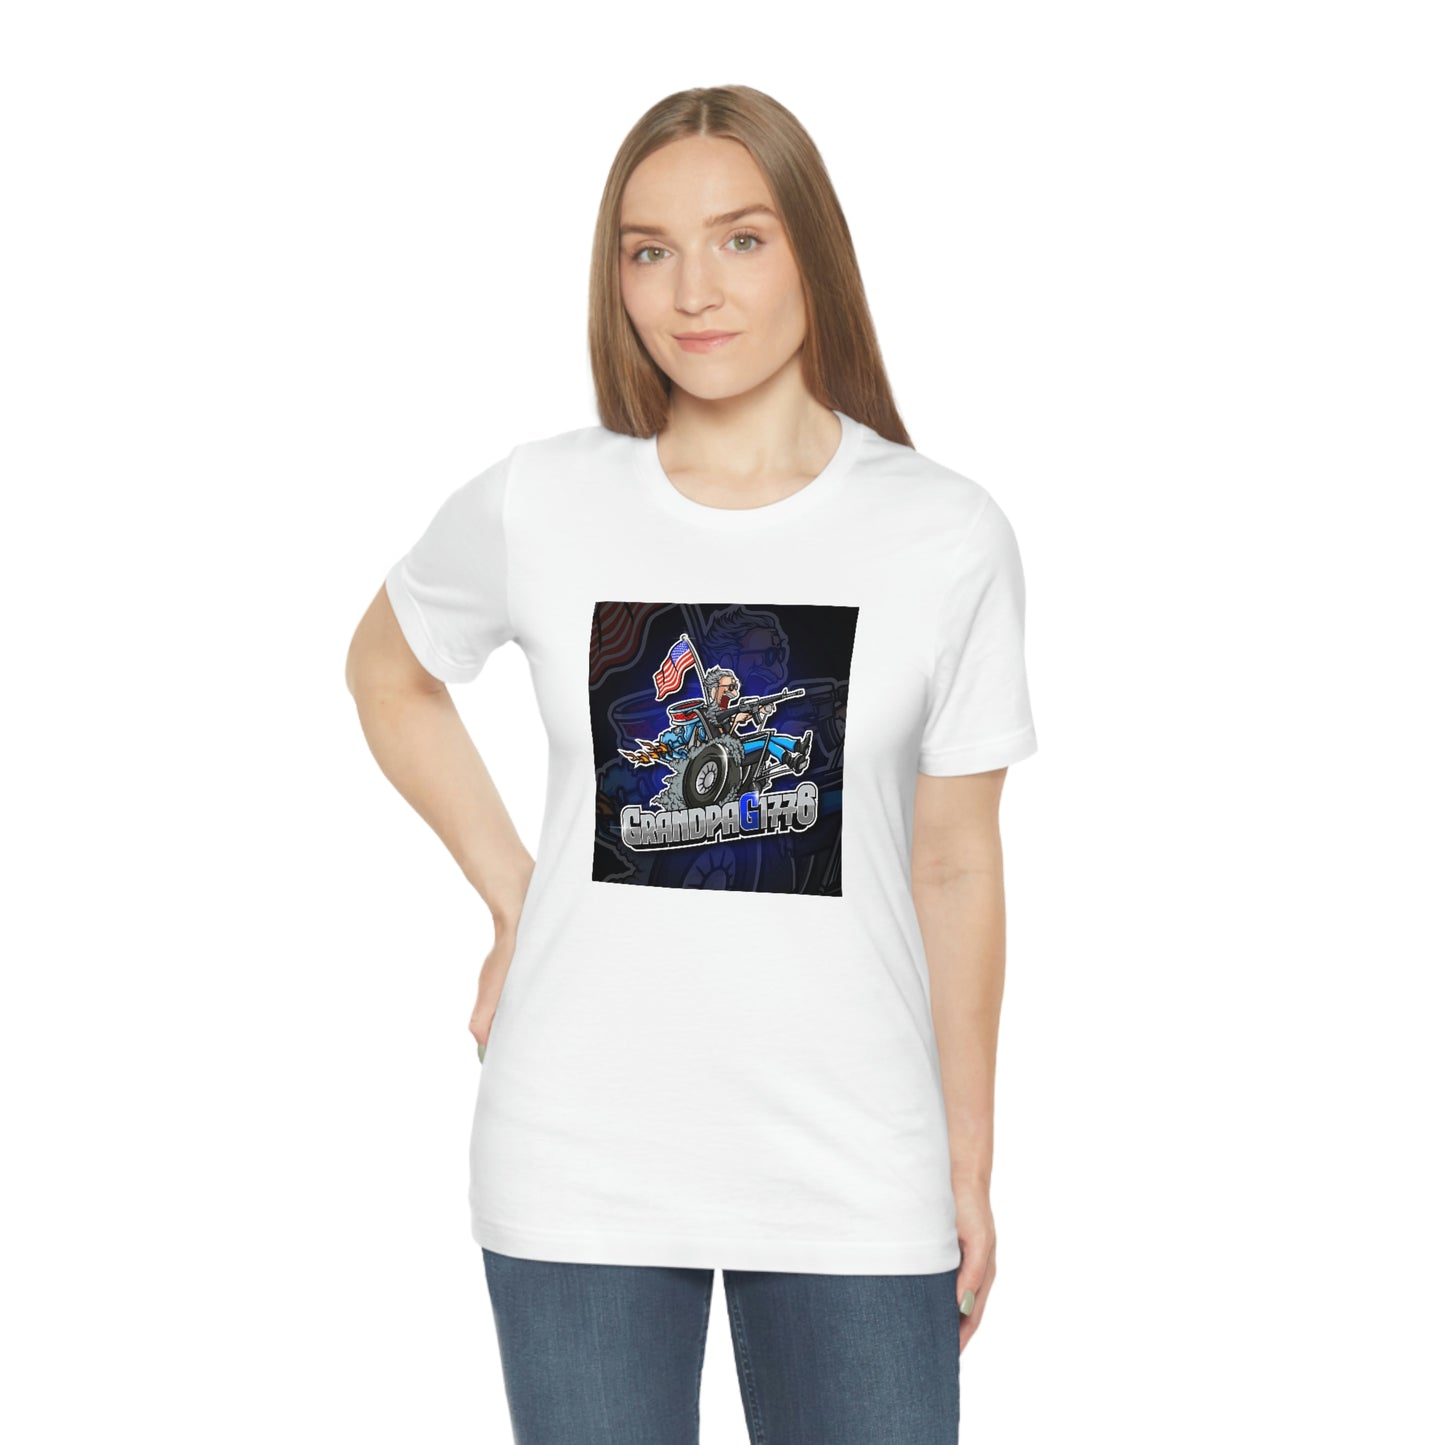 GrandpaG Silhouette Unisex T-shirt